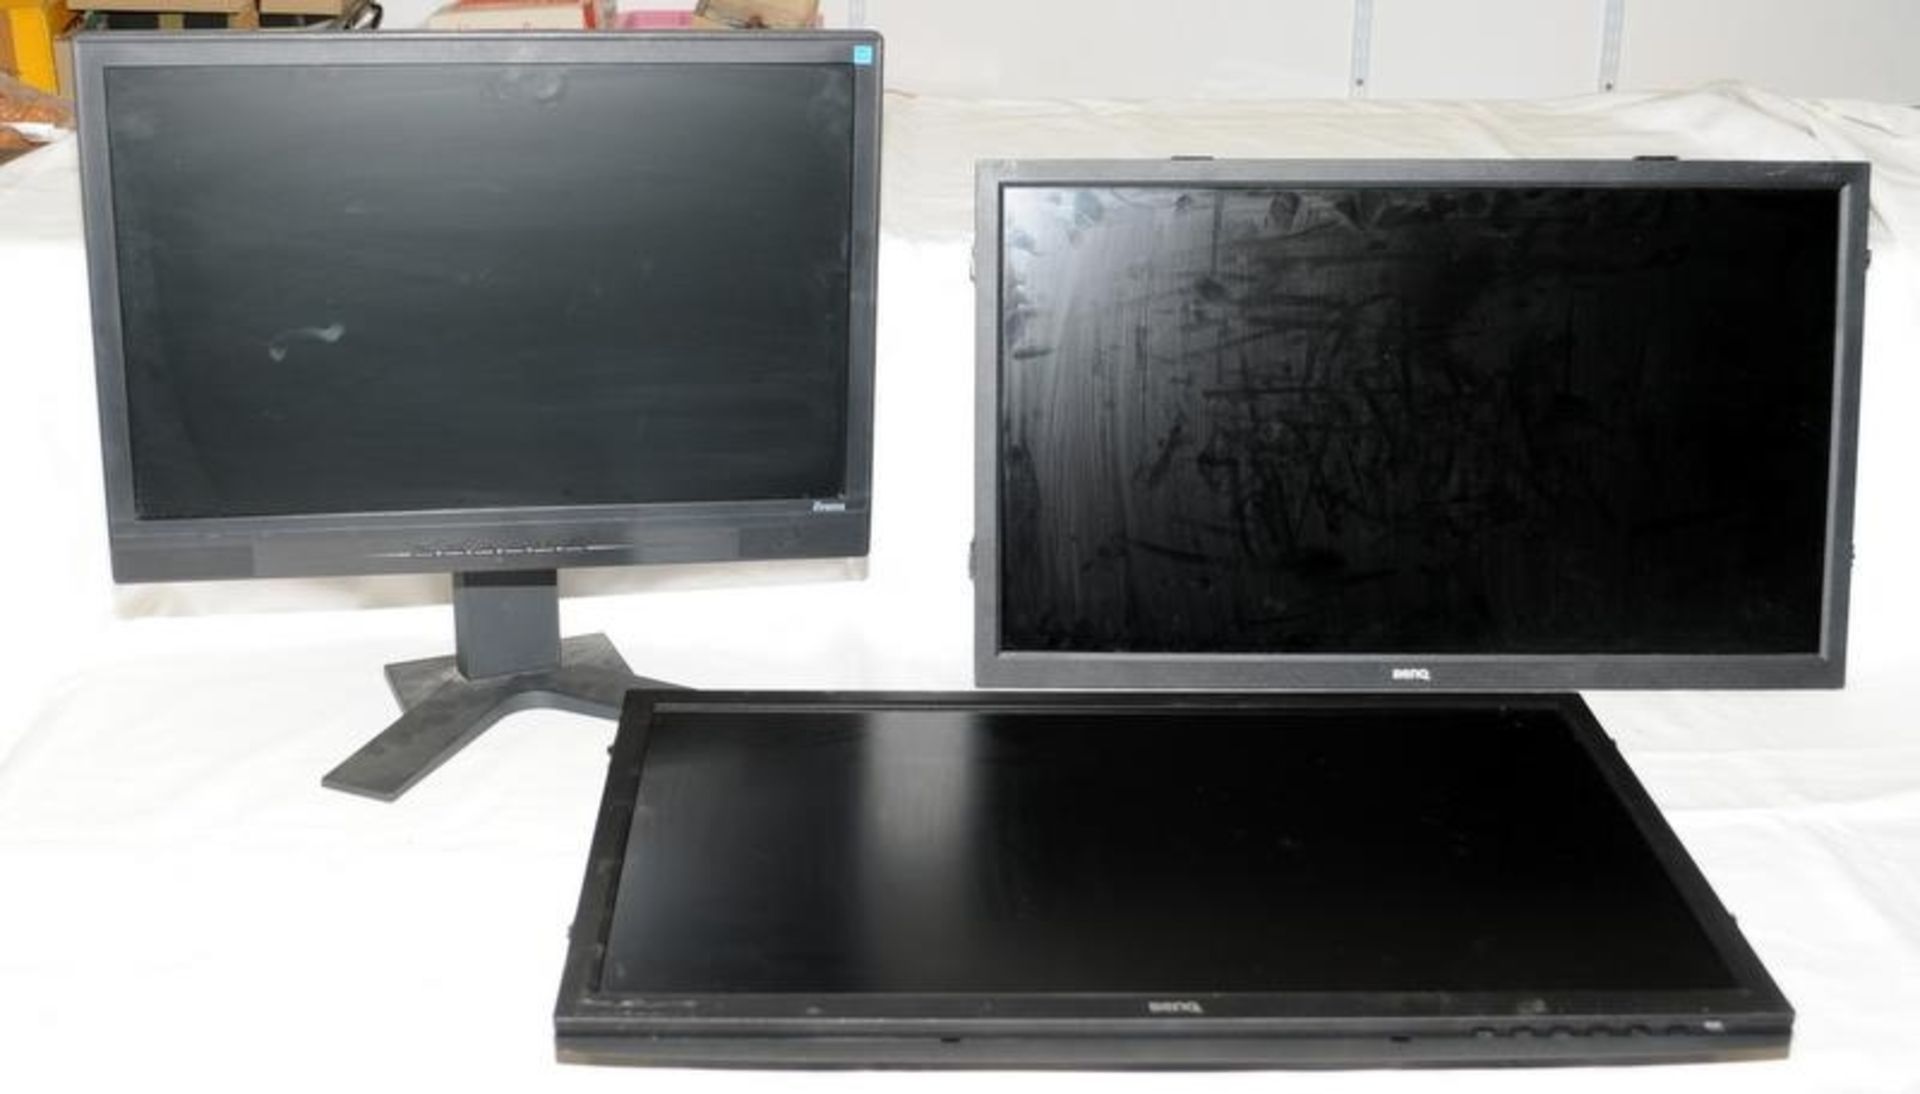 2 x Benq computer monitors c/w 1 x Iiyama monitor. Benq's require stands/wall brackets. (Ref 4, 9,